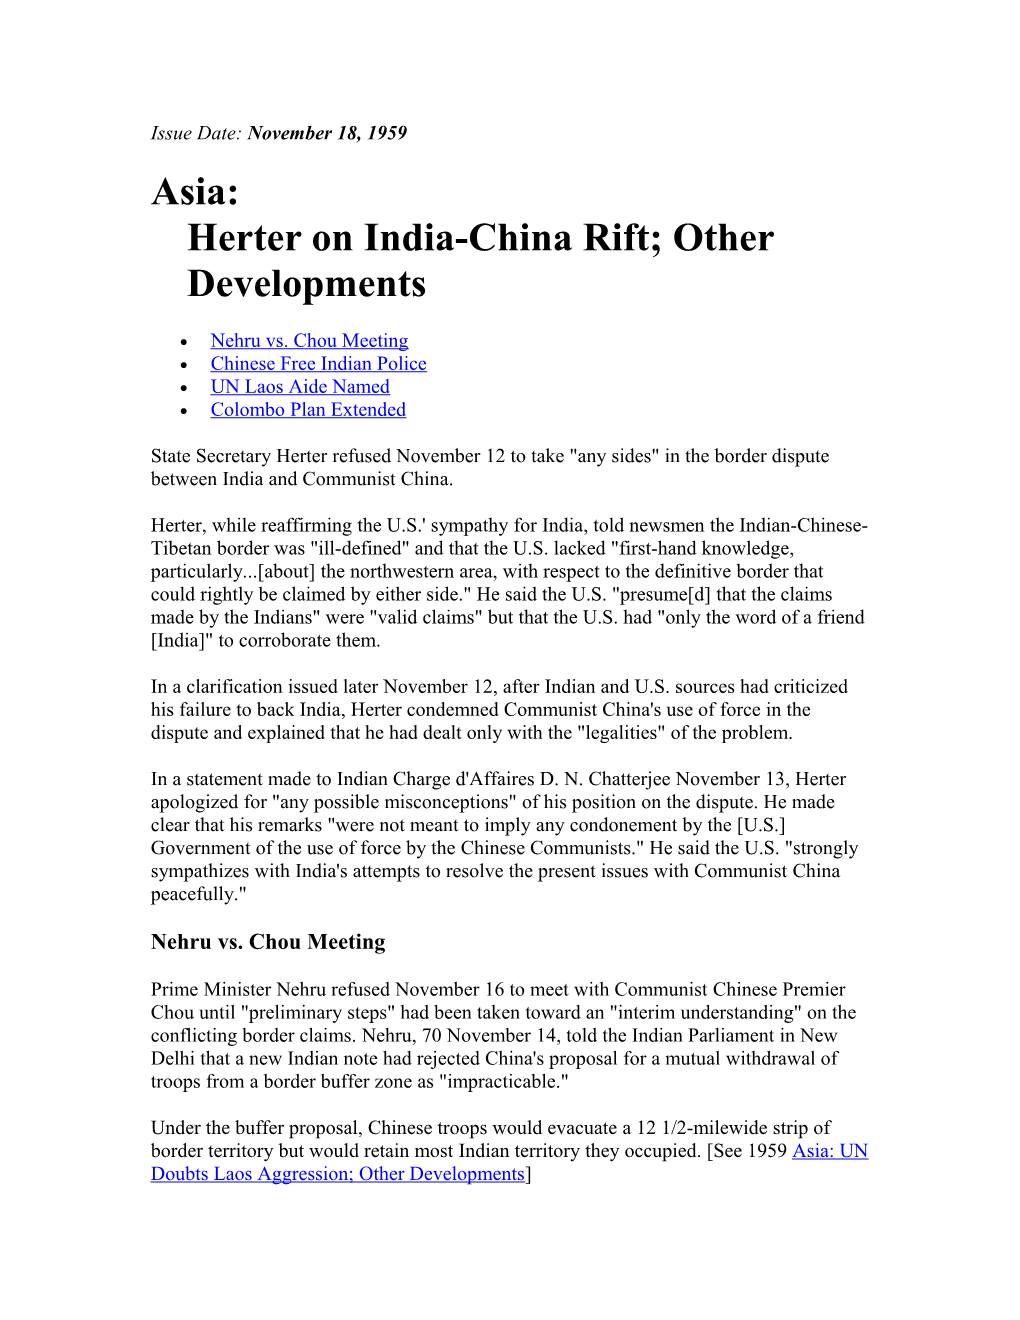 Asia:Herter on India-China Rift; Other Developments